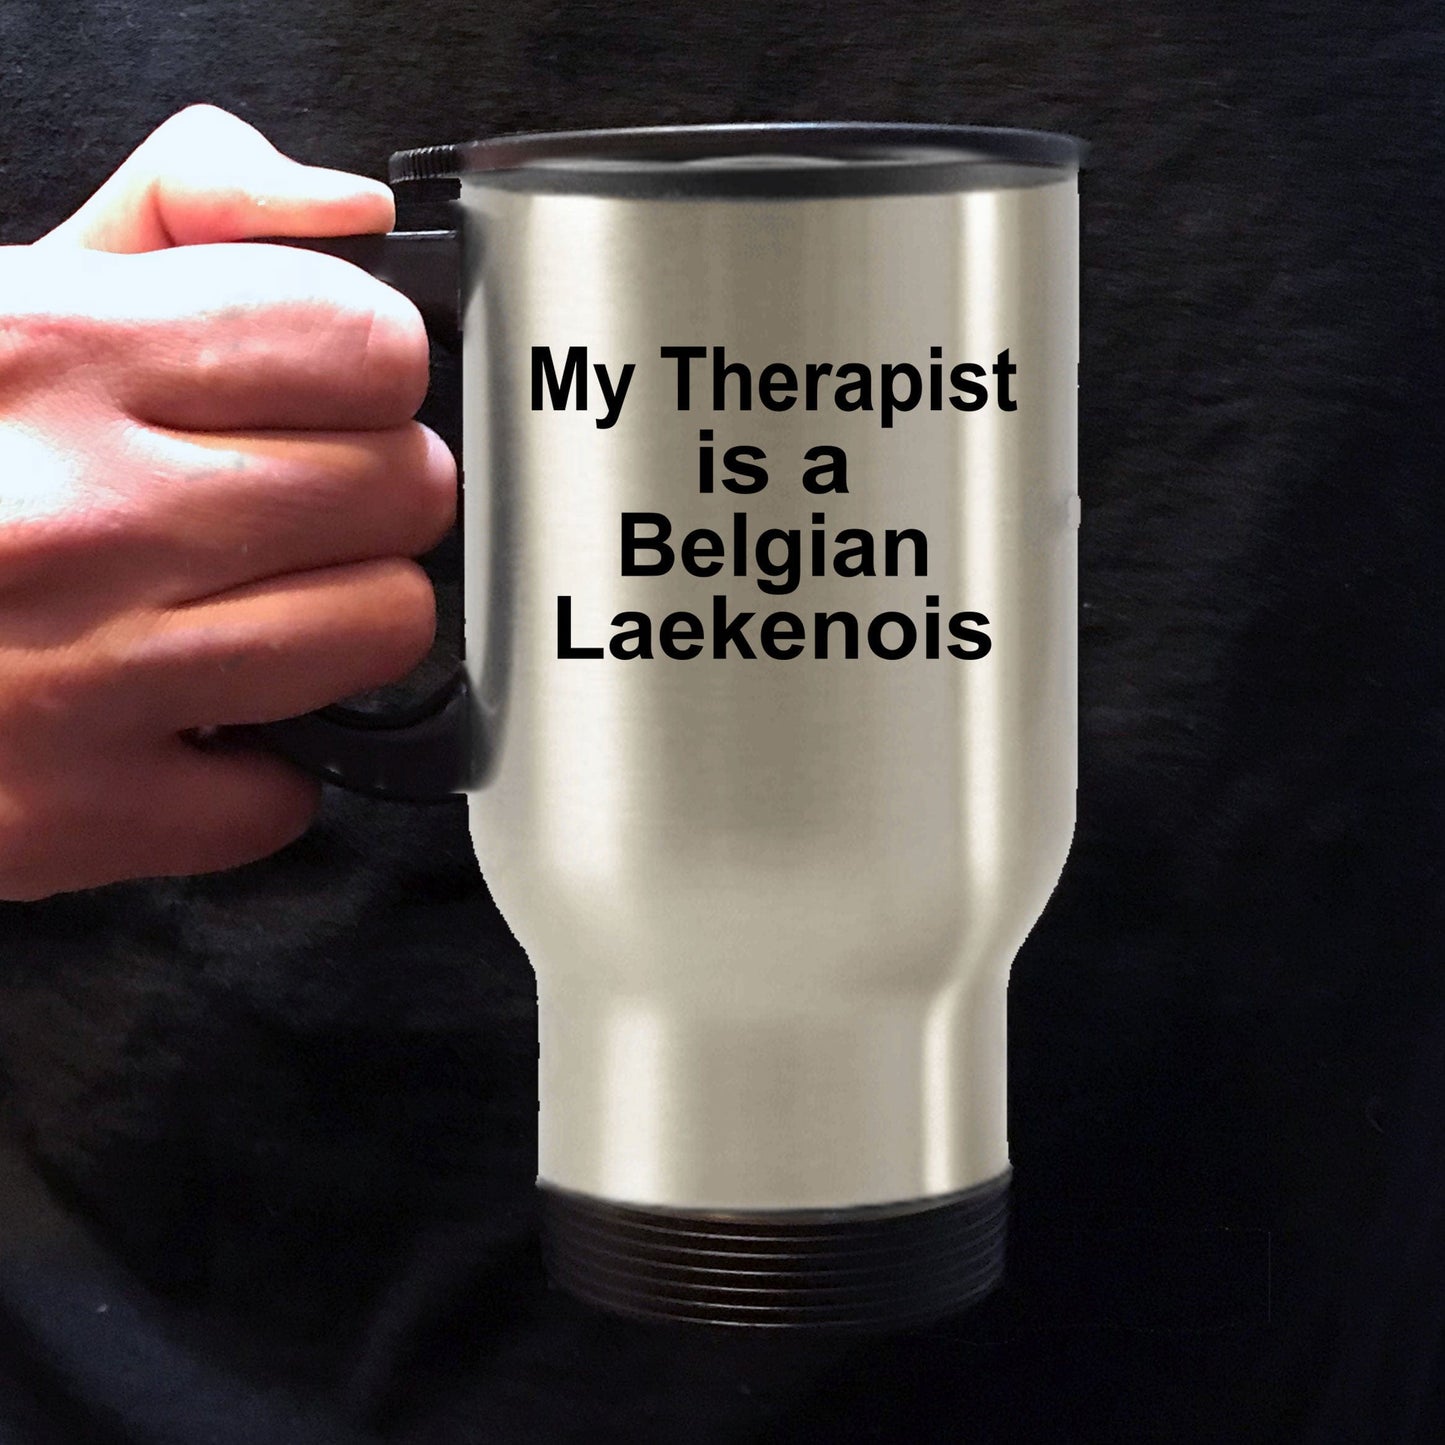 Belgian Laekenois Dog Therapist Travel Coffee Mug